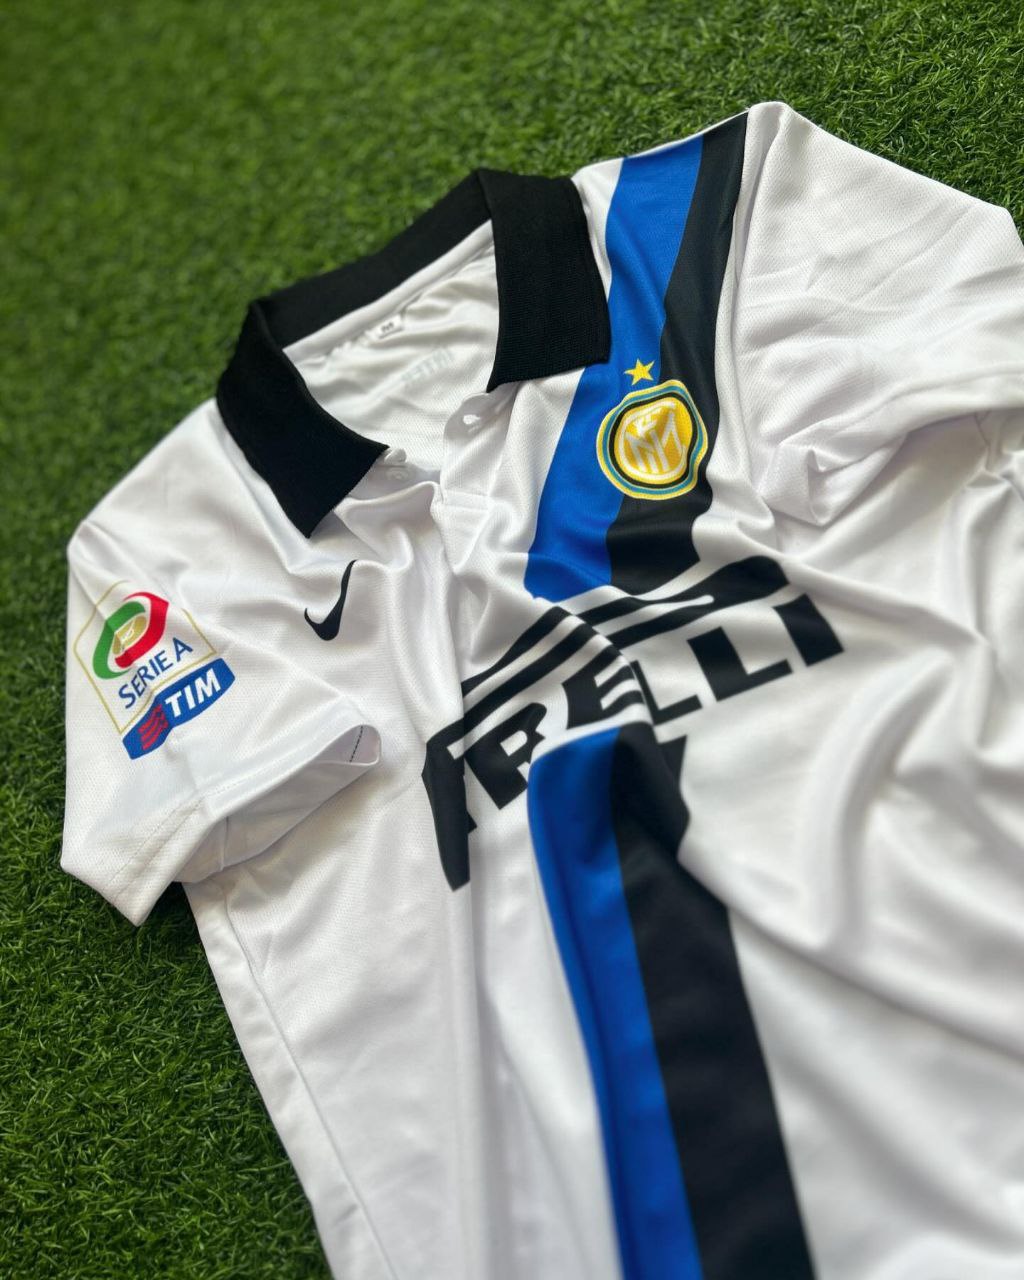 Diego Forlán Inter White Retro Jersey